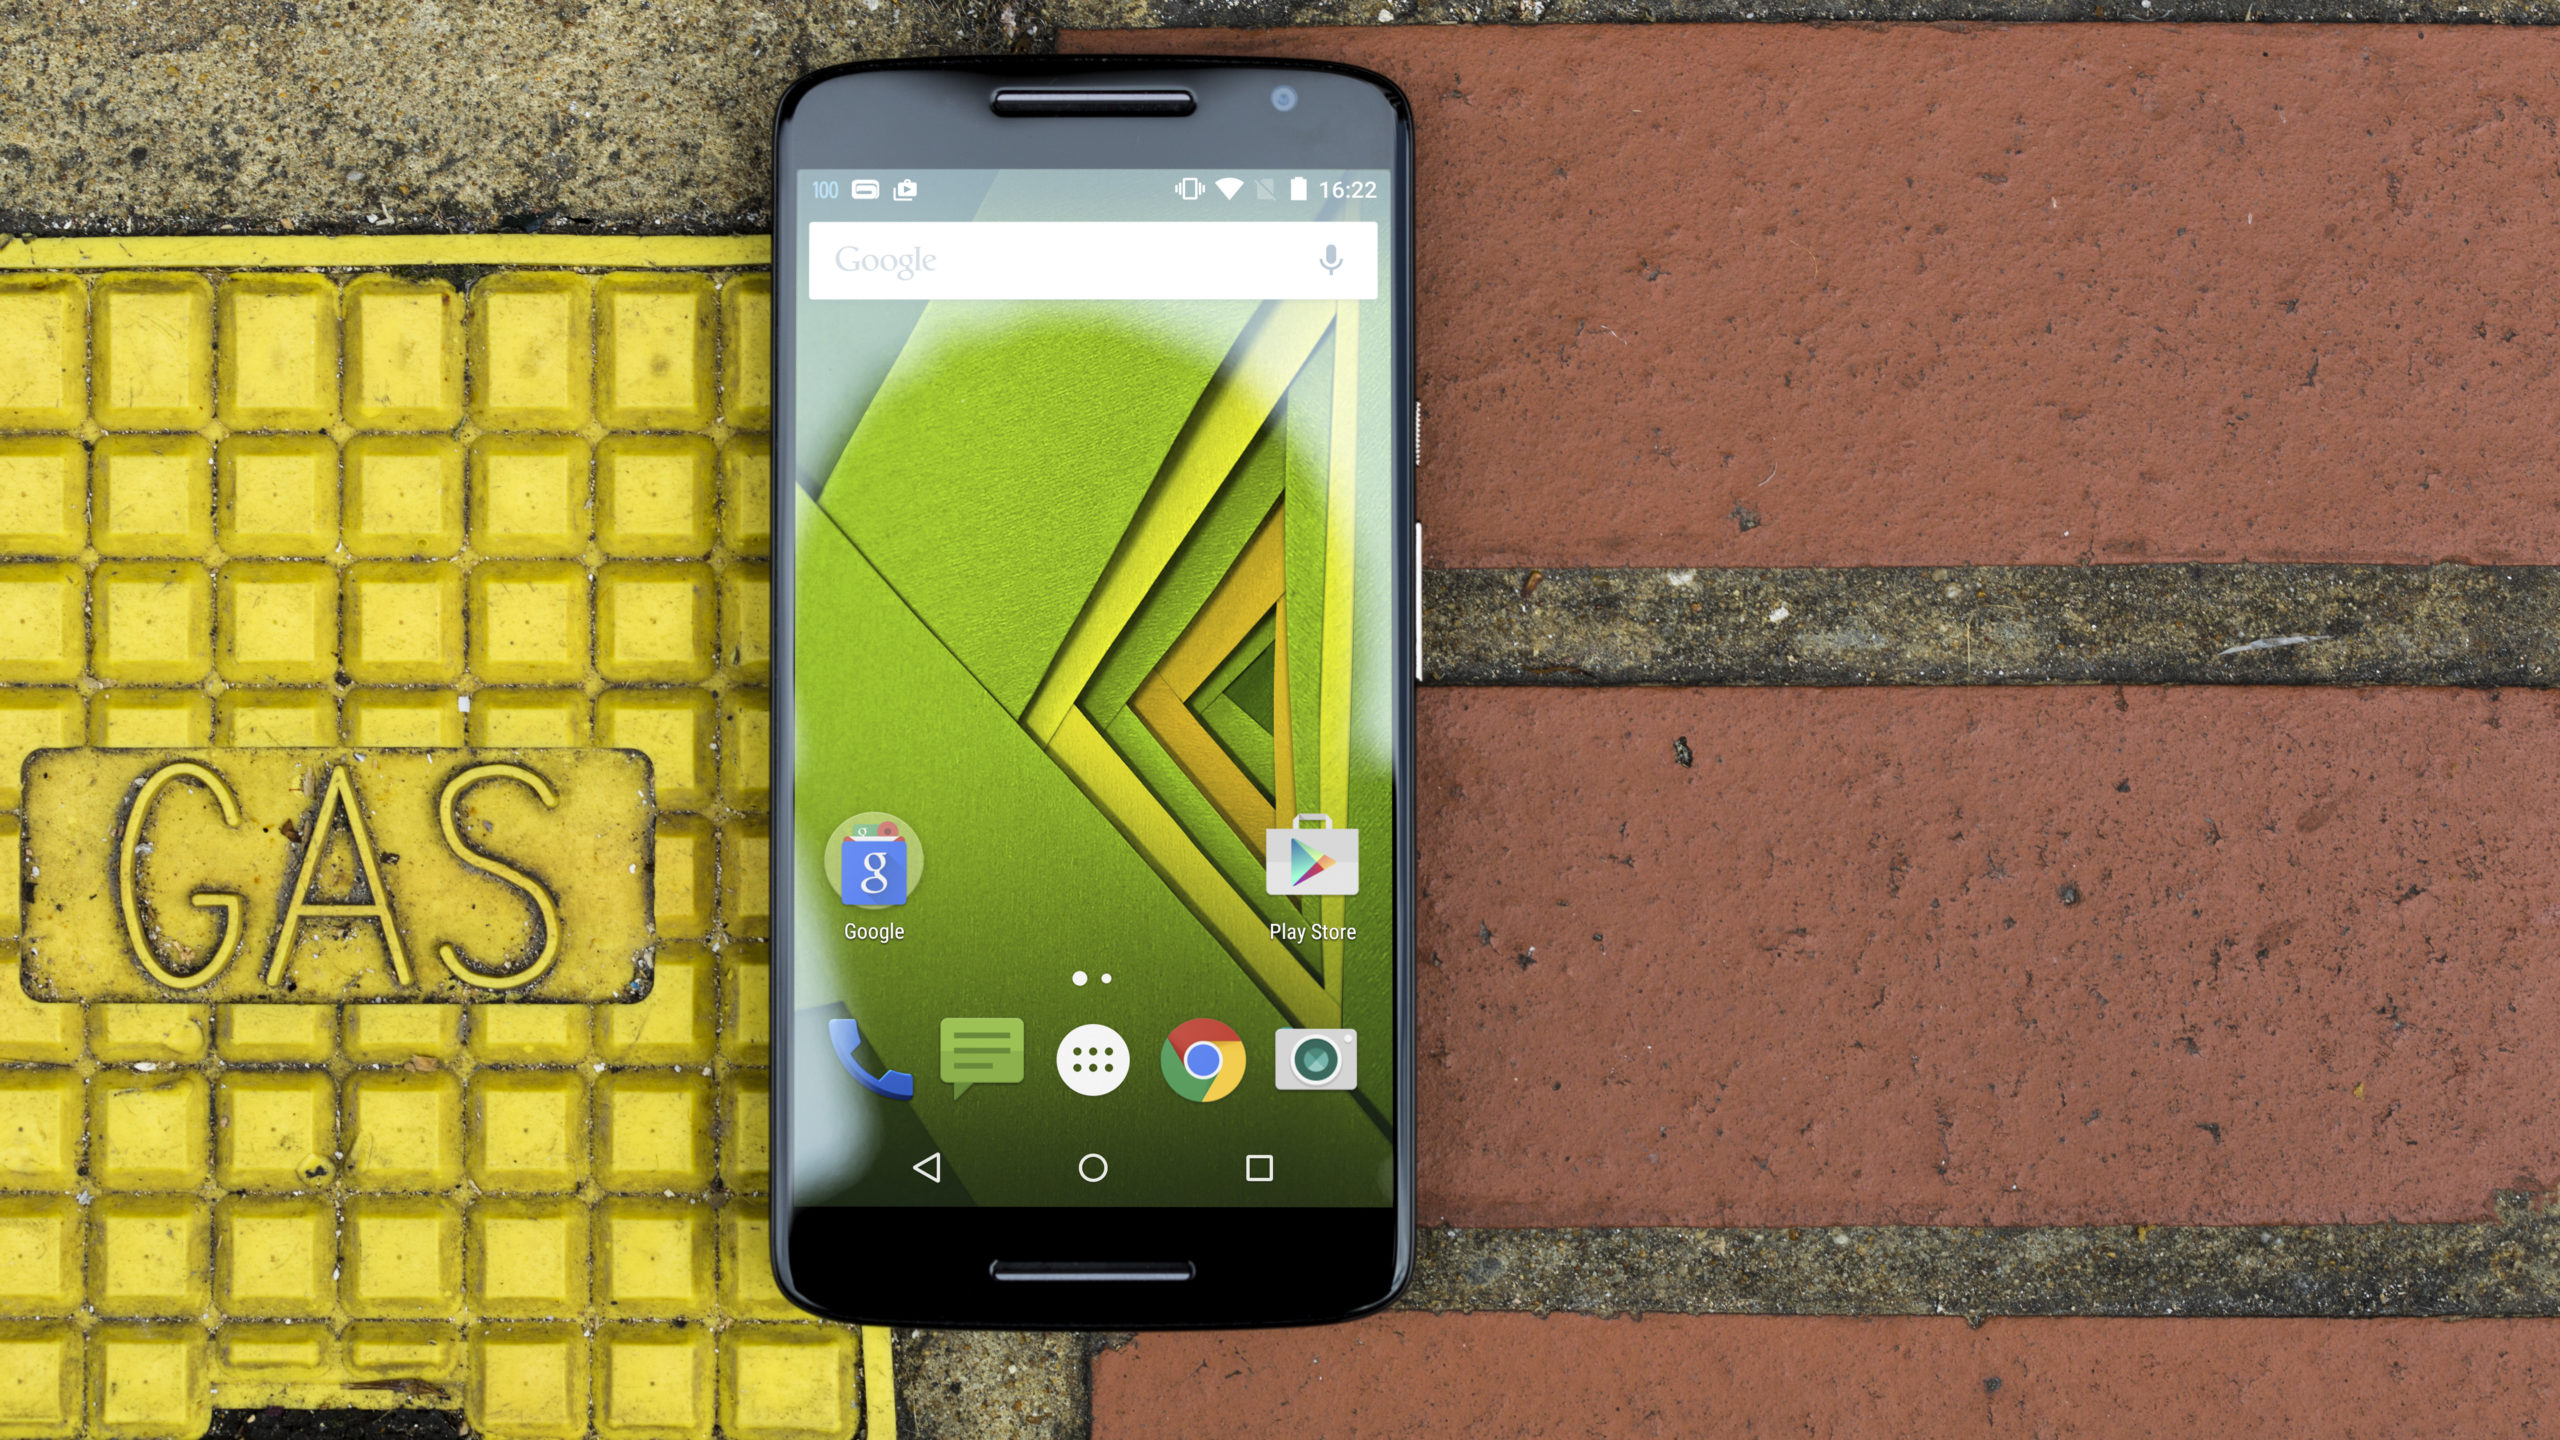 Recenzie Motorola Moto X Play: Durată mare a bateriei, preț excelent